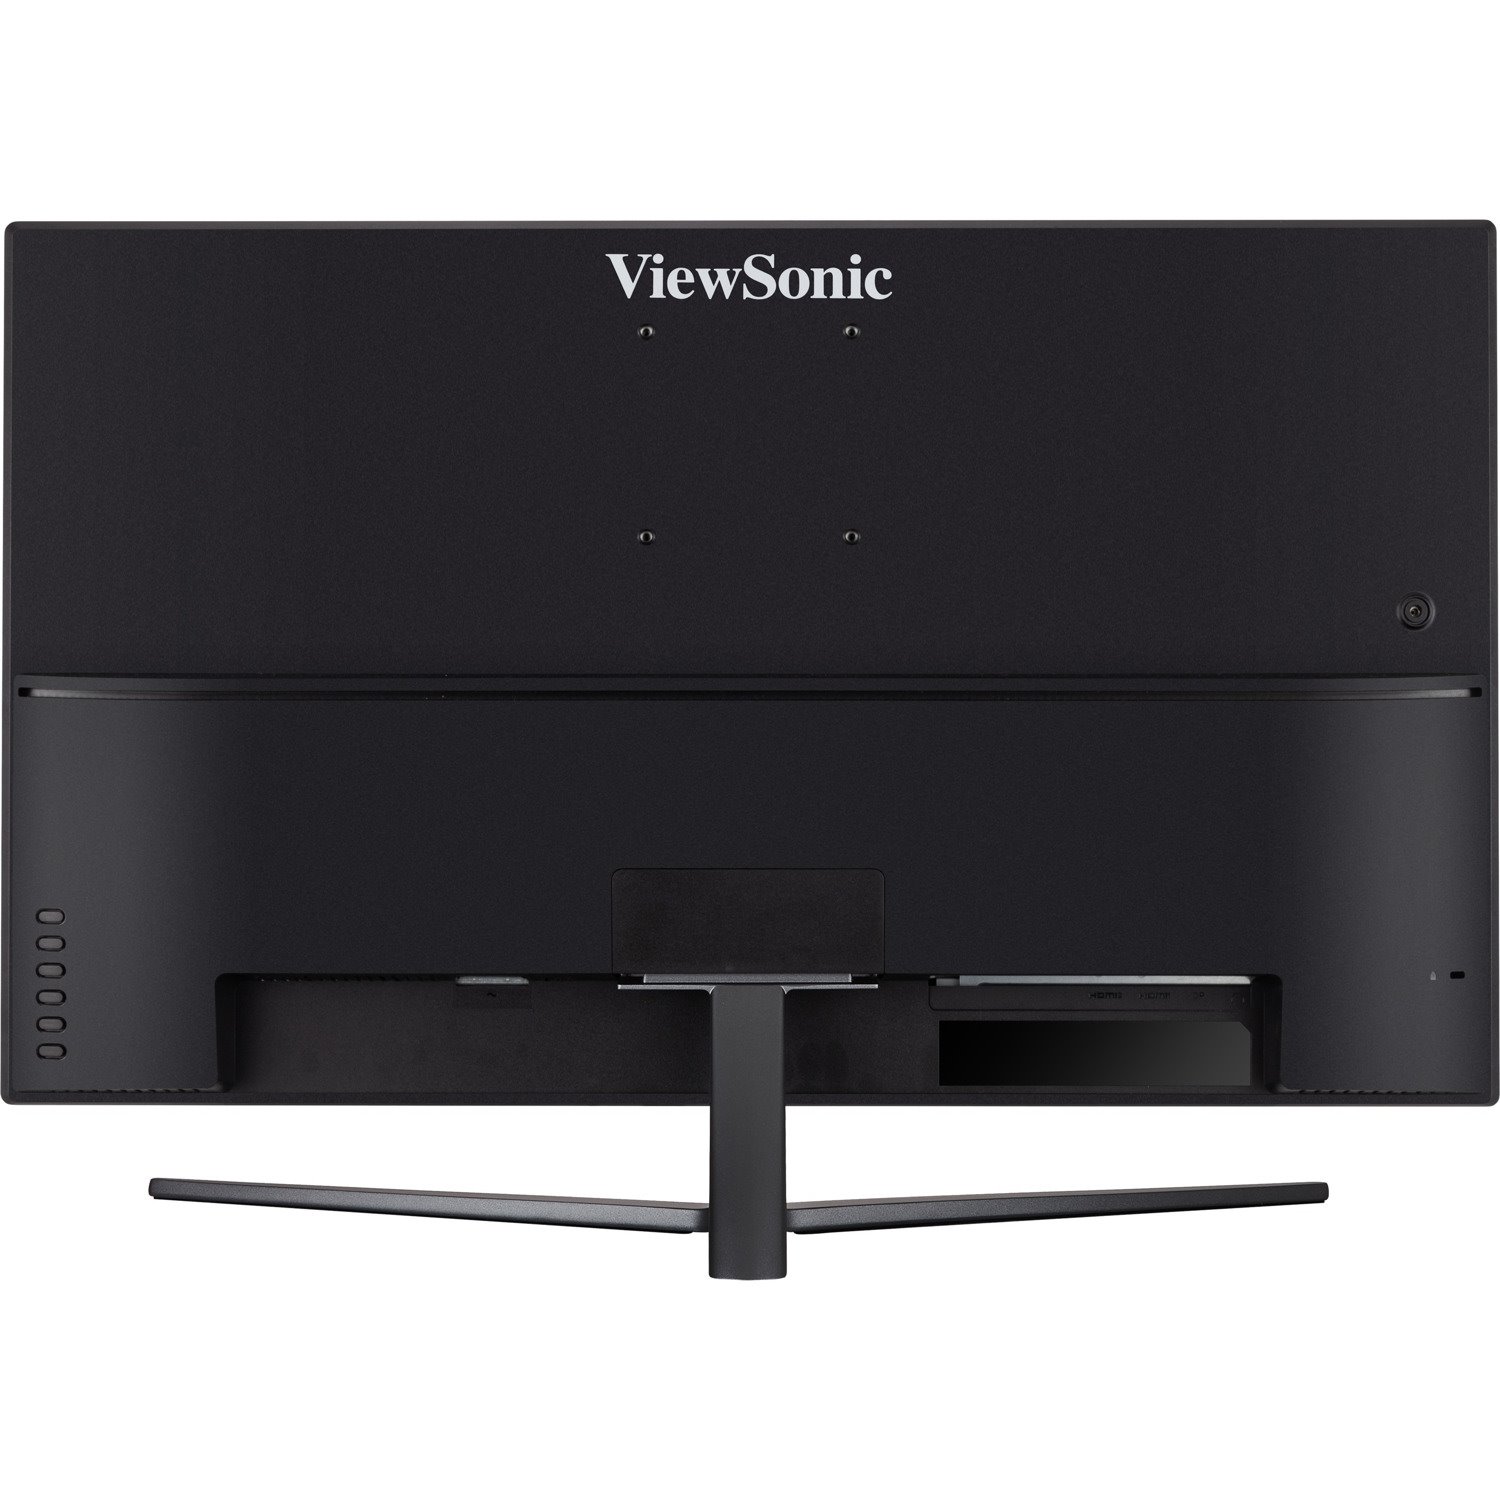 ViewSonic VX3211-4K-MHD 32" 4K UHD Monitor with FreeSync, HDR10, HDMI, DisplayPort, VGA, and sRGB